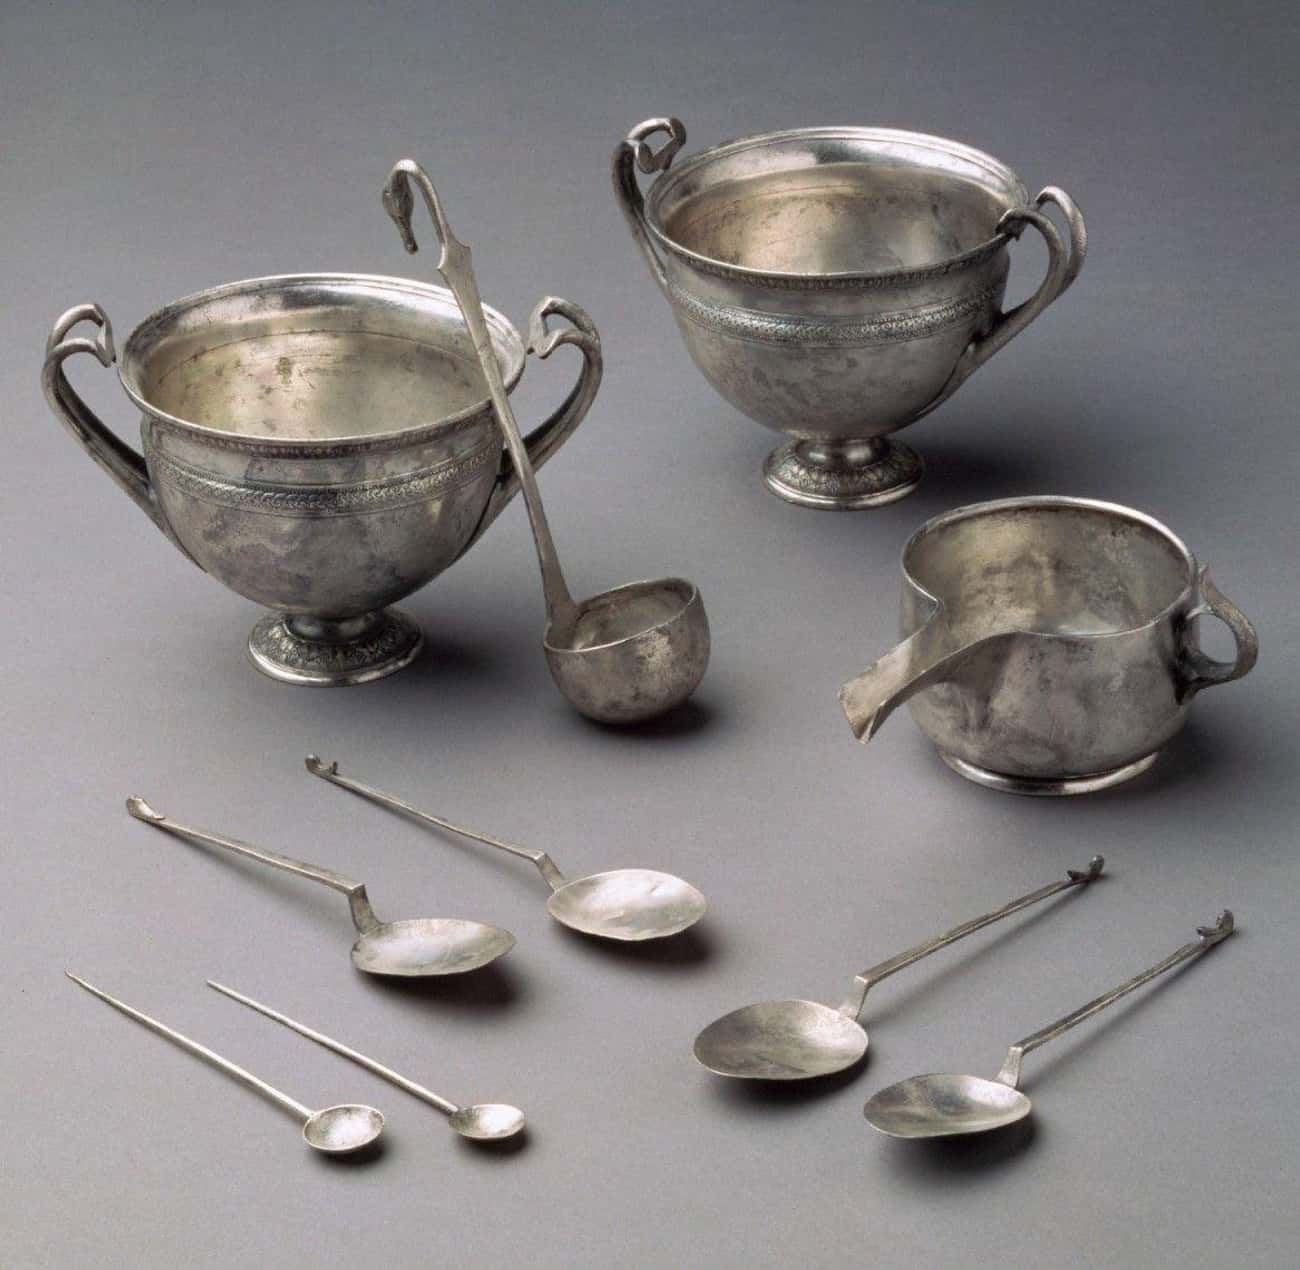 Посуда в древности